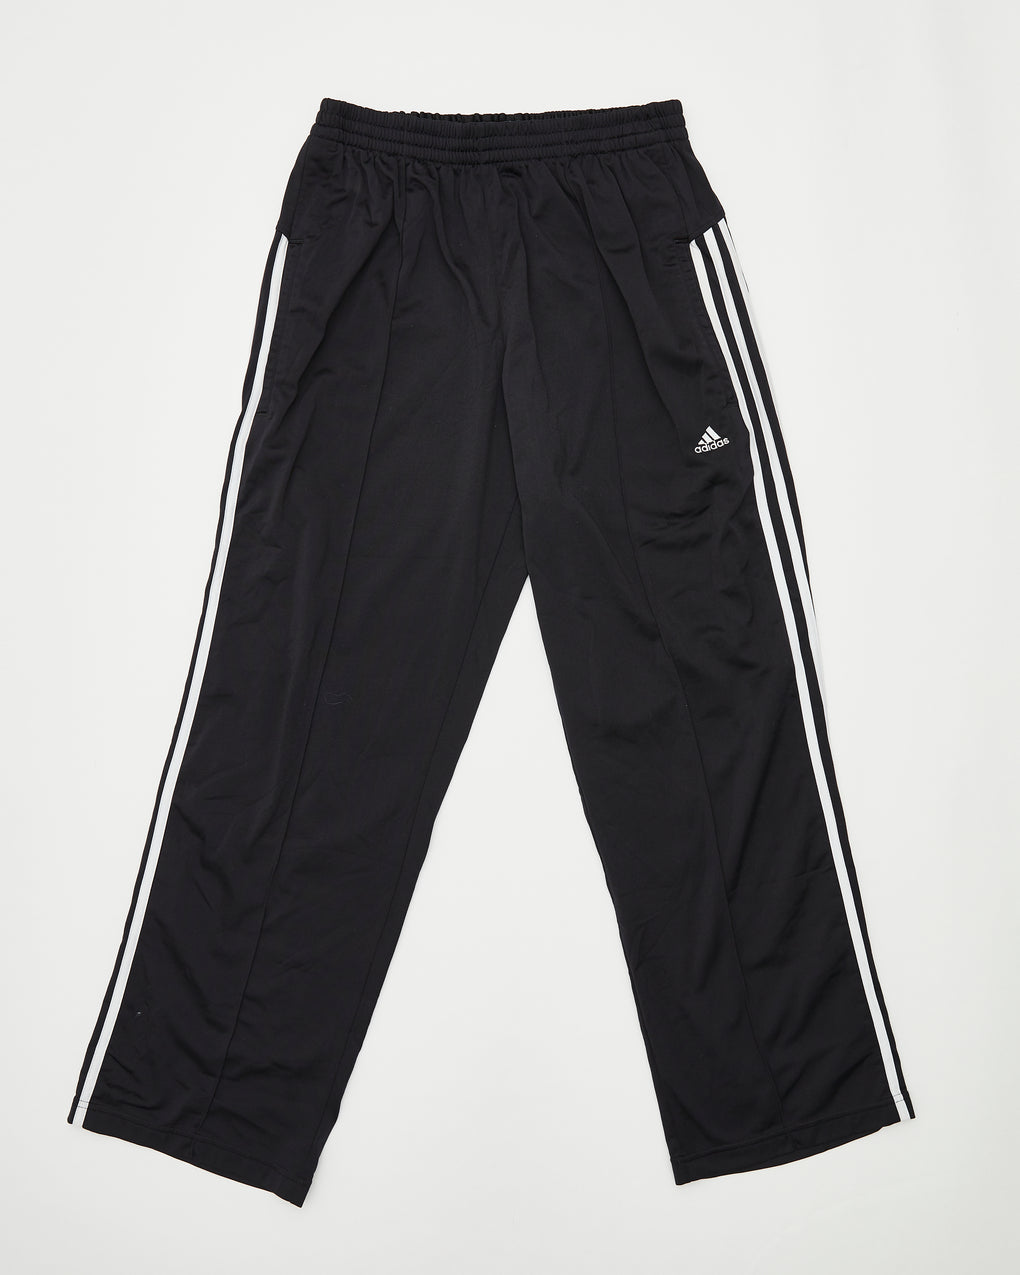 Adidas Black/White Track Pants (M)